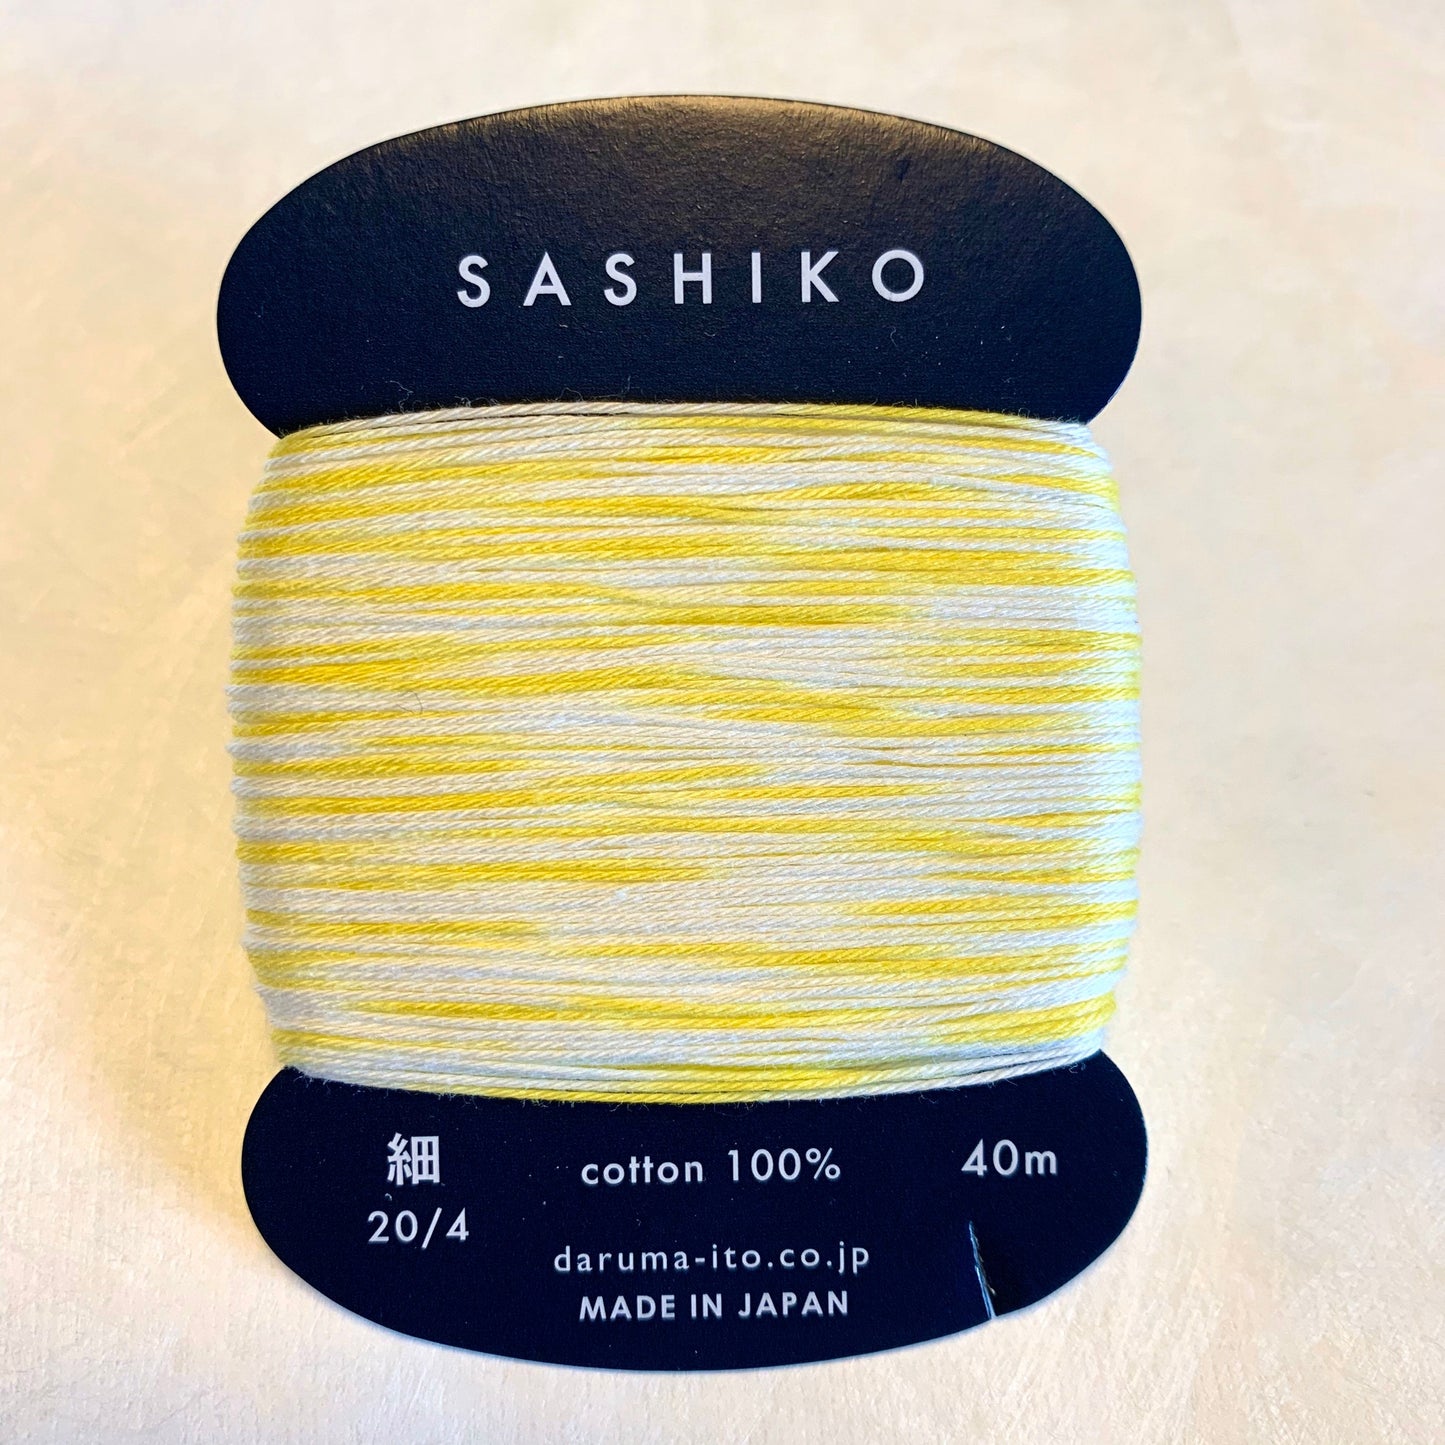 Daruma #303 LEMON SQUASH variegated sunshine yellow and daisy white Japanese Cotton SASHIKO thread 40 meter card 20/4